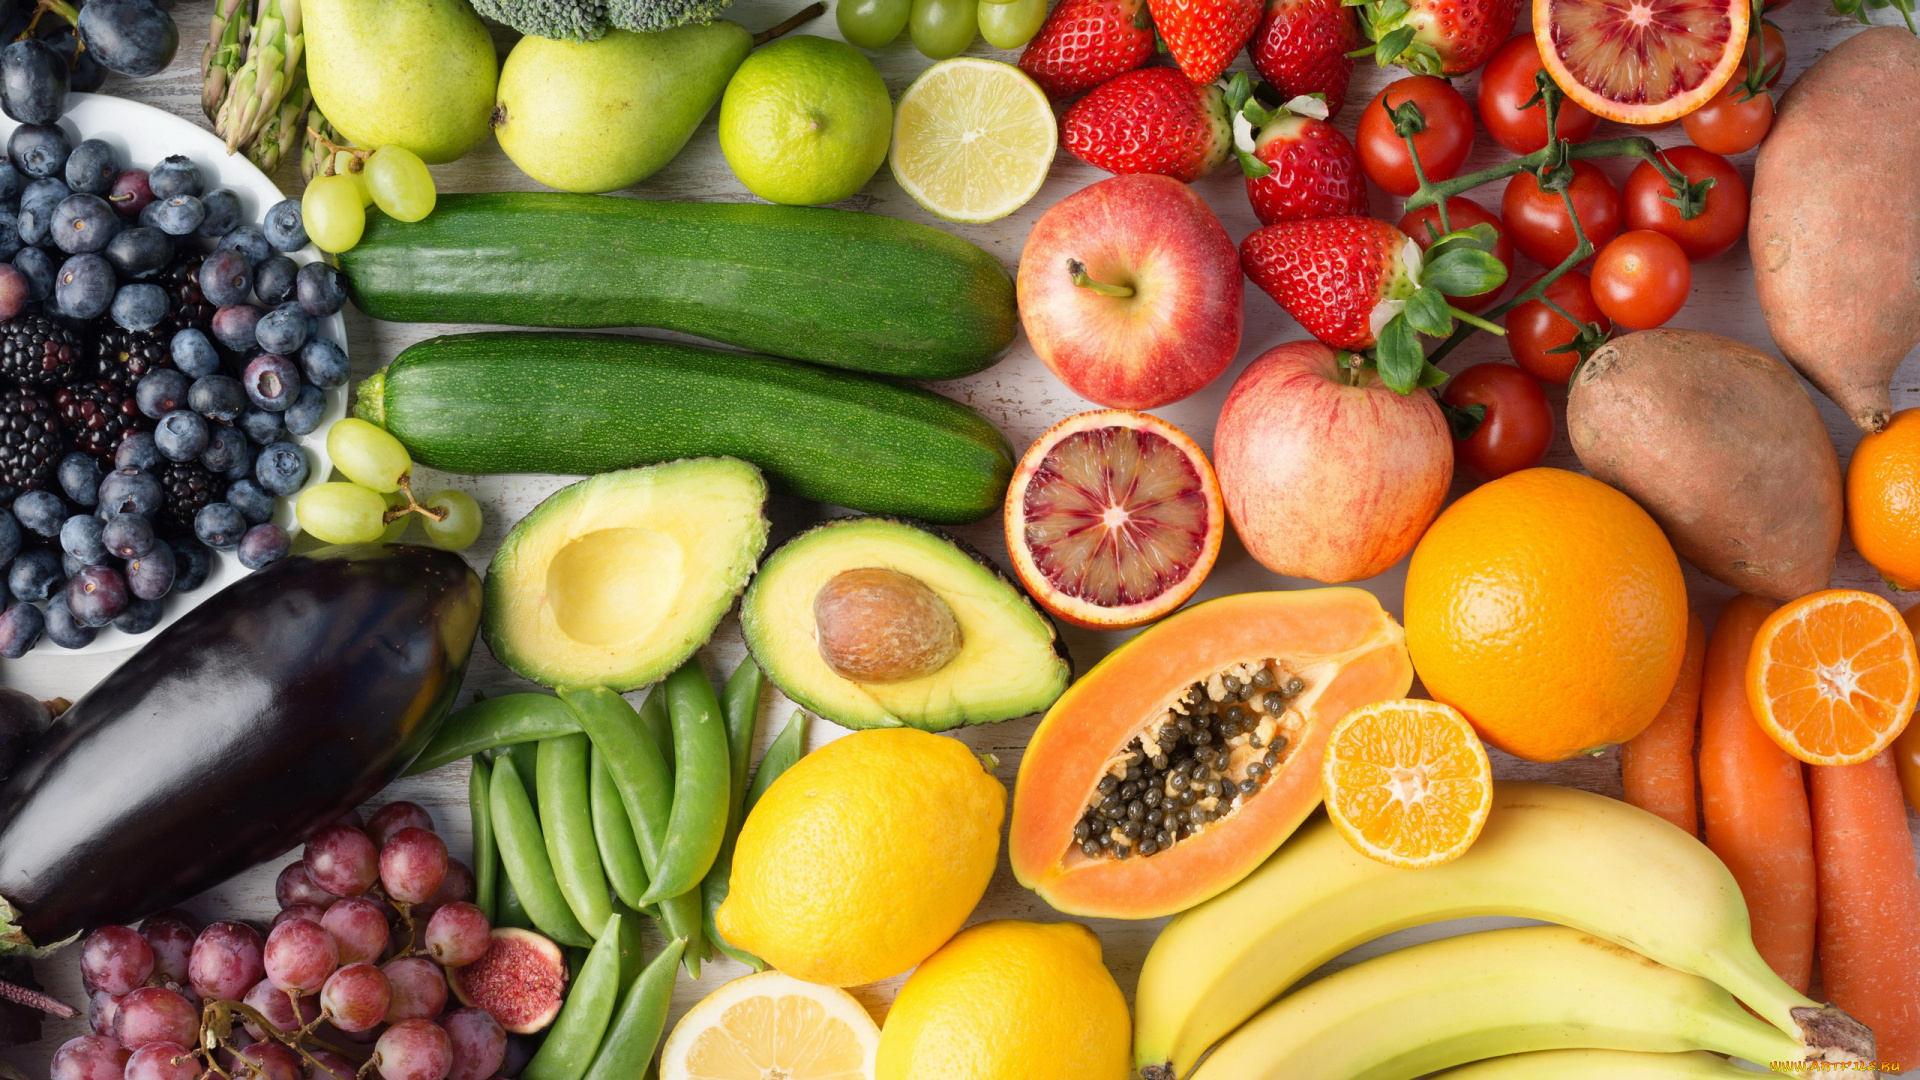 еда, фрукты, и, овощи, вместе, батат, баклажан, цуккини, банан, виноград, папайя, клубника